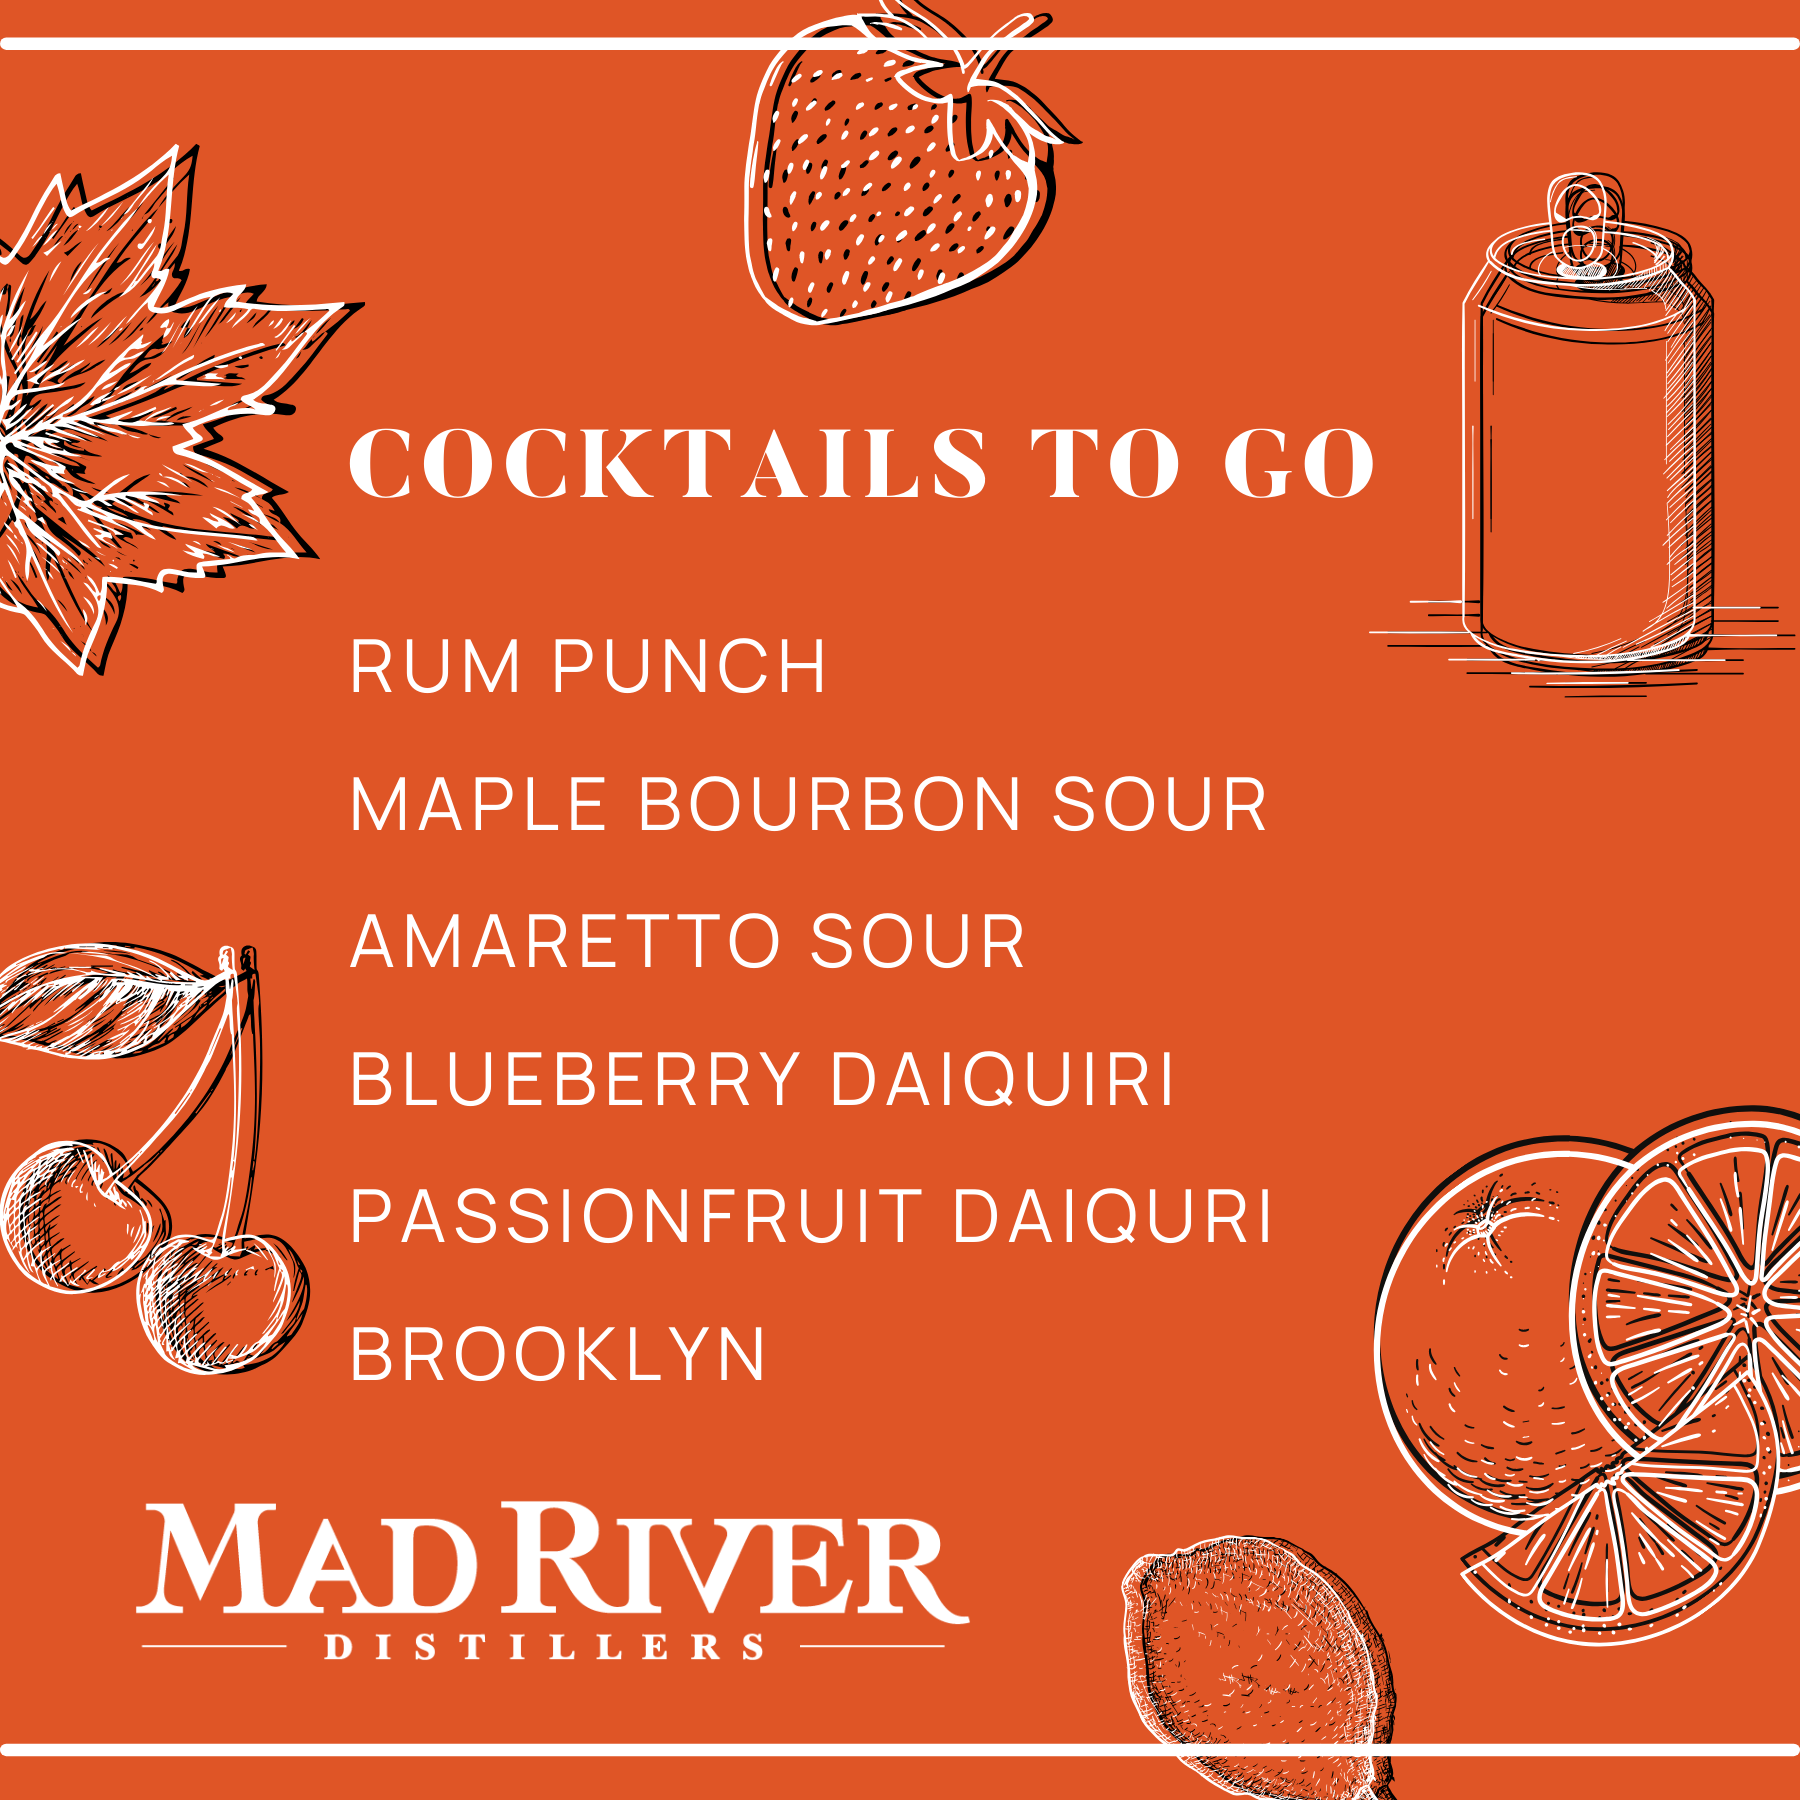 Canned cocktails to go menu: Rum Punch, Maple Bourbon Sour, Amaretto Sour, Blueberry Daiquiri, Passionfruit Daiquiri, Brooklyn